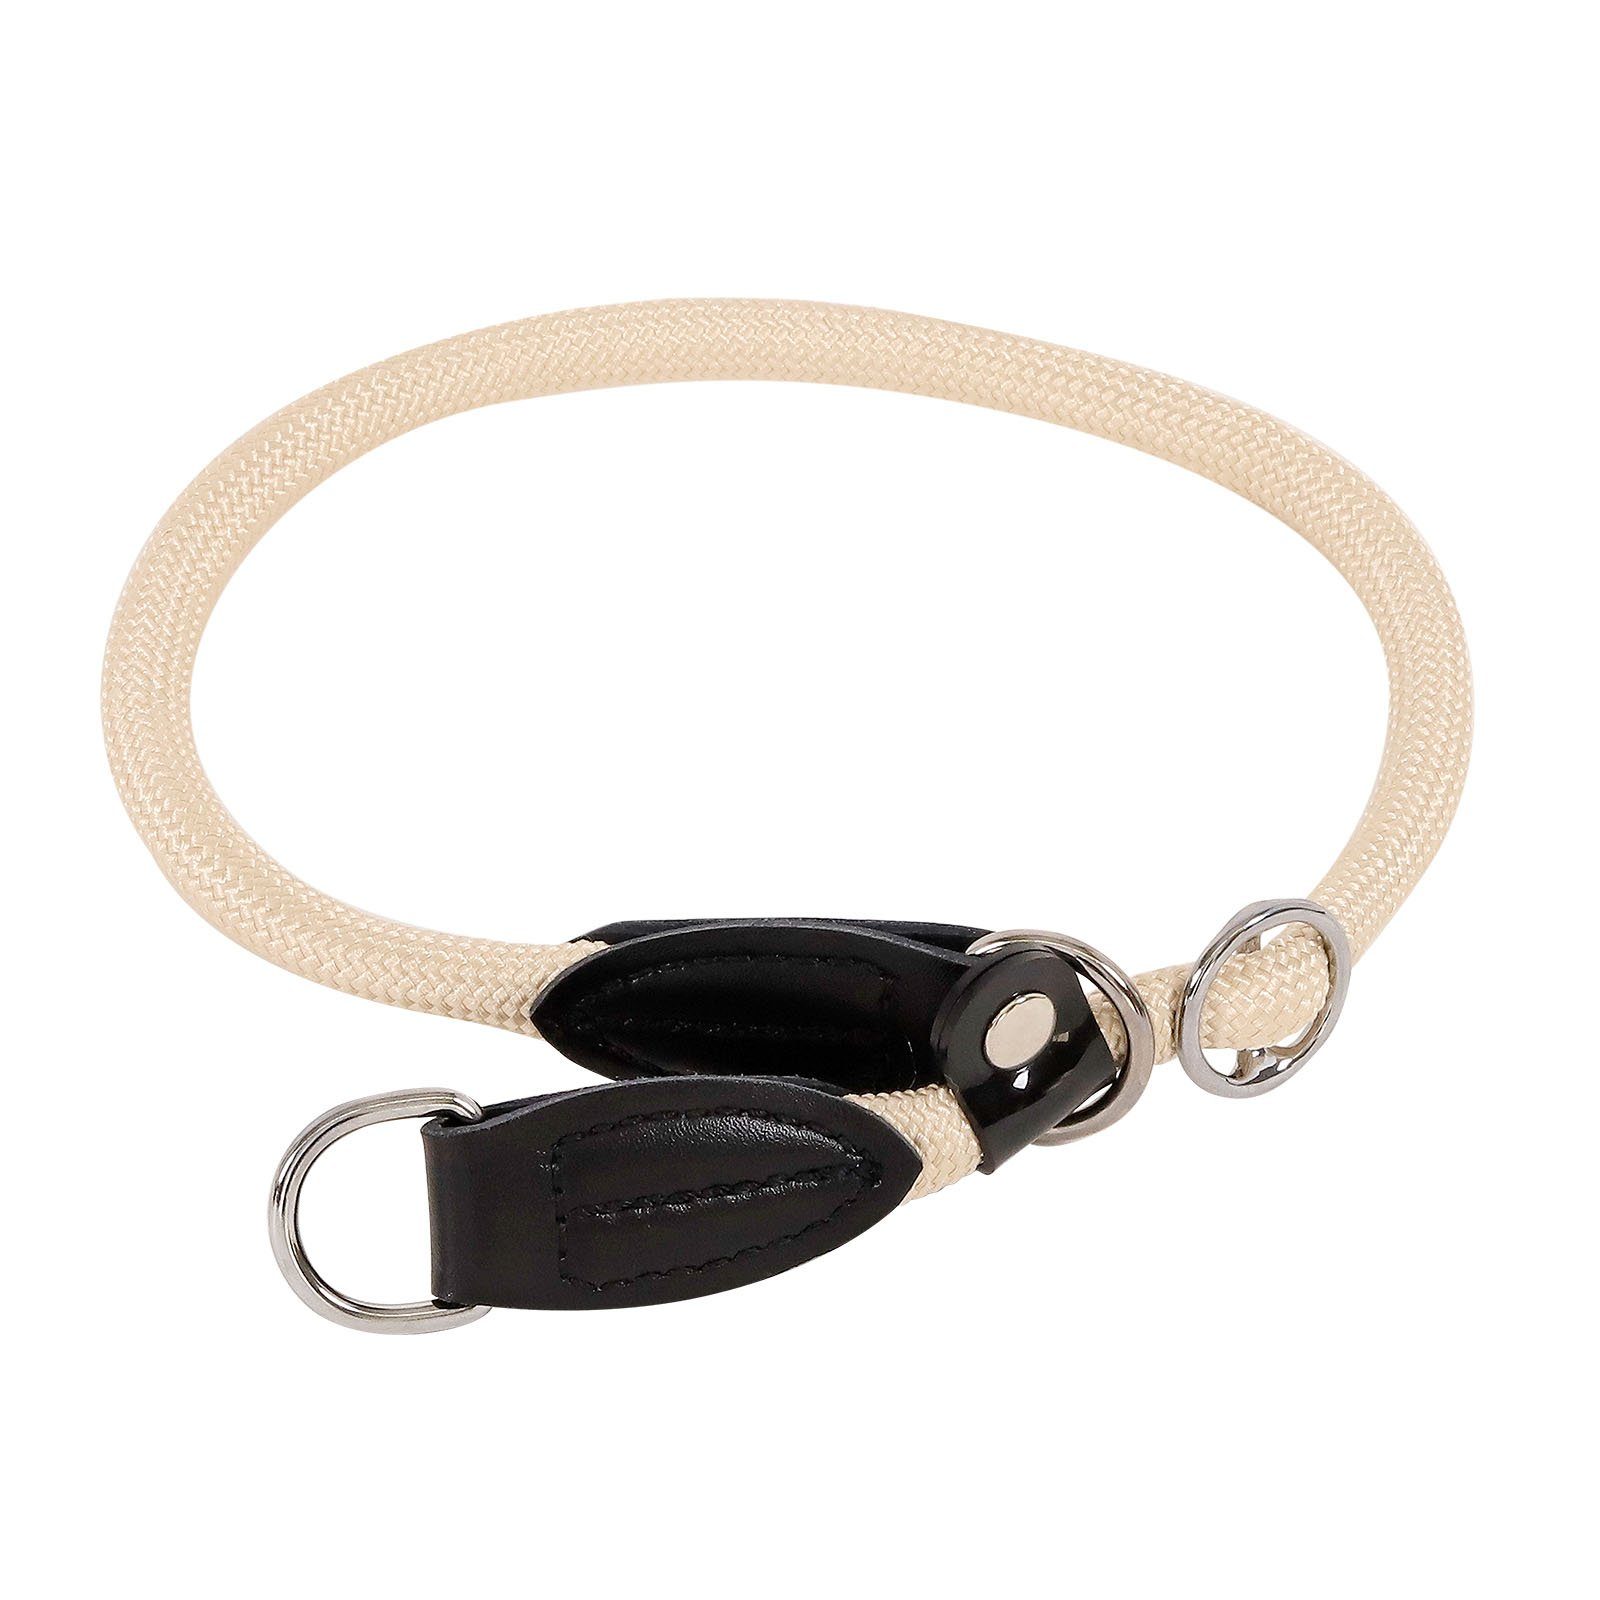 lionto Hunde-Halsband Hundehalsband mit Zugstopp, Retrieverhalsband, 35 cm, beige